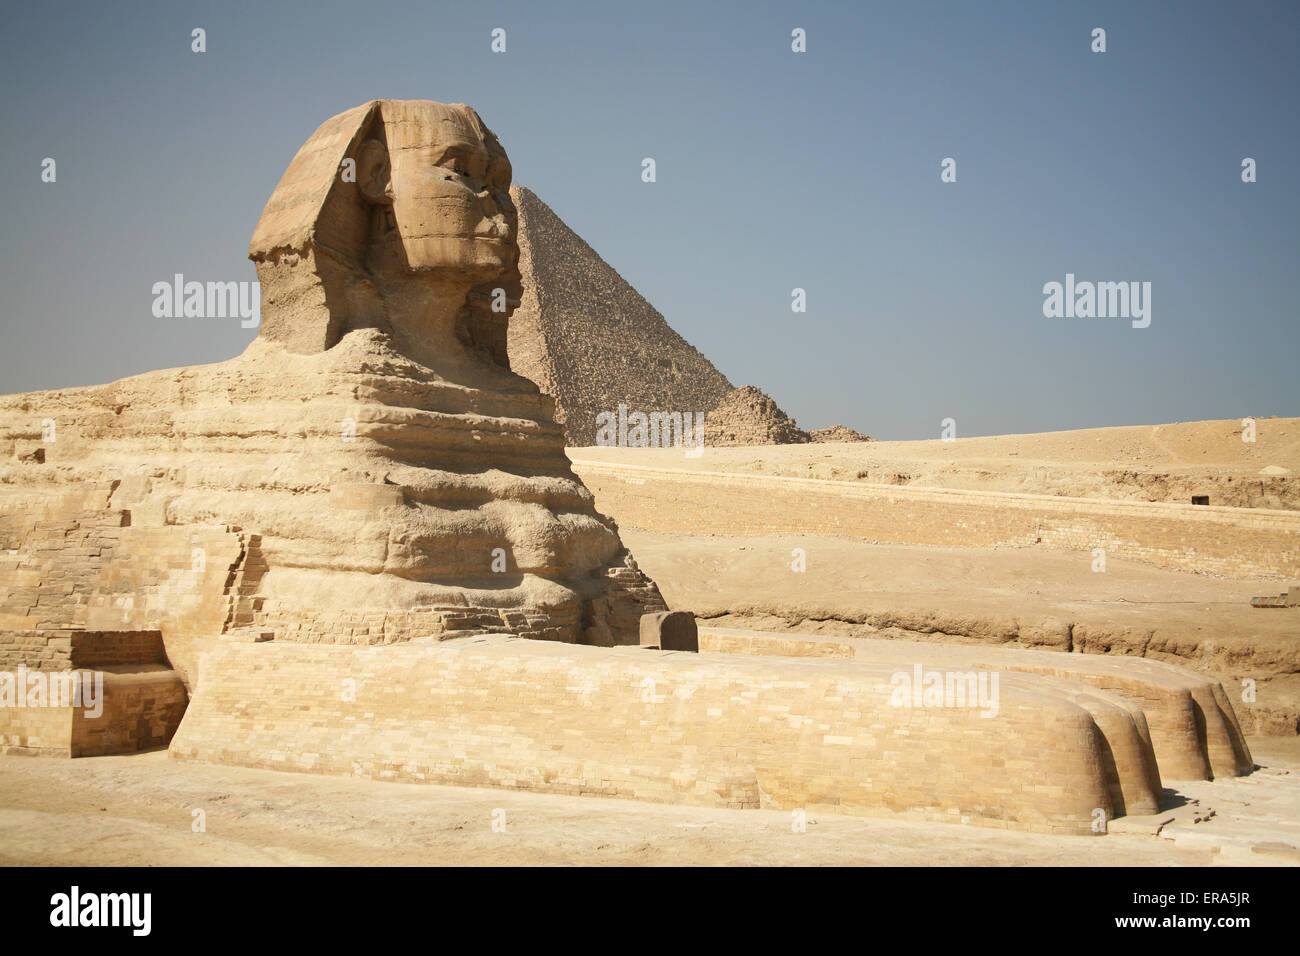 The Pyramids and Sphinx Giza plateau Cairo Egypt Stock Photo - Alamy